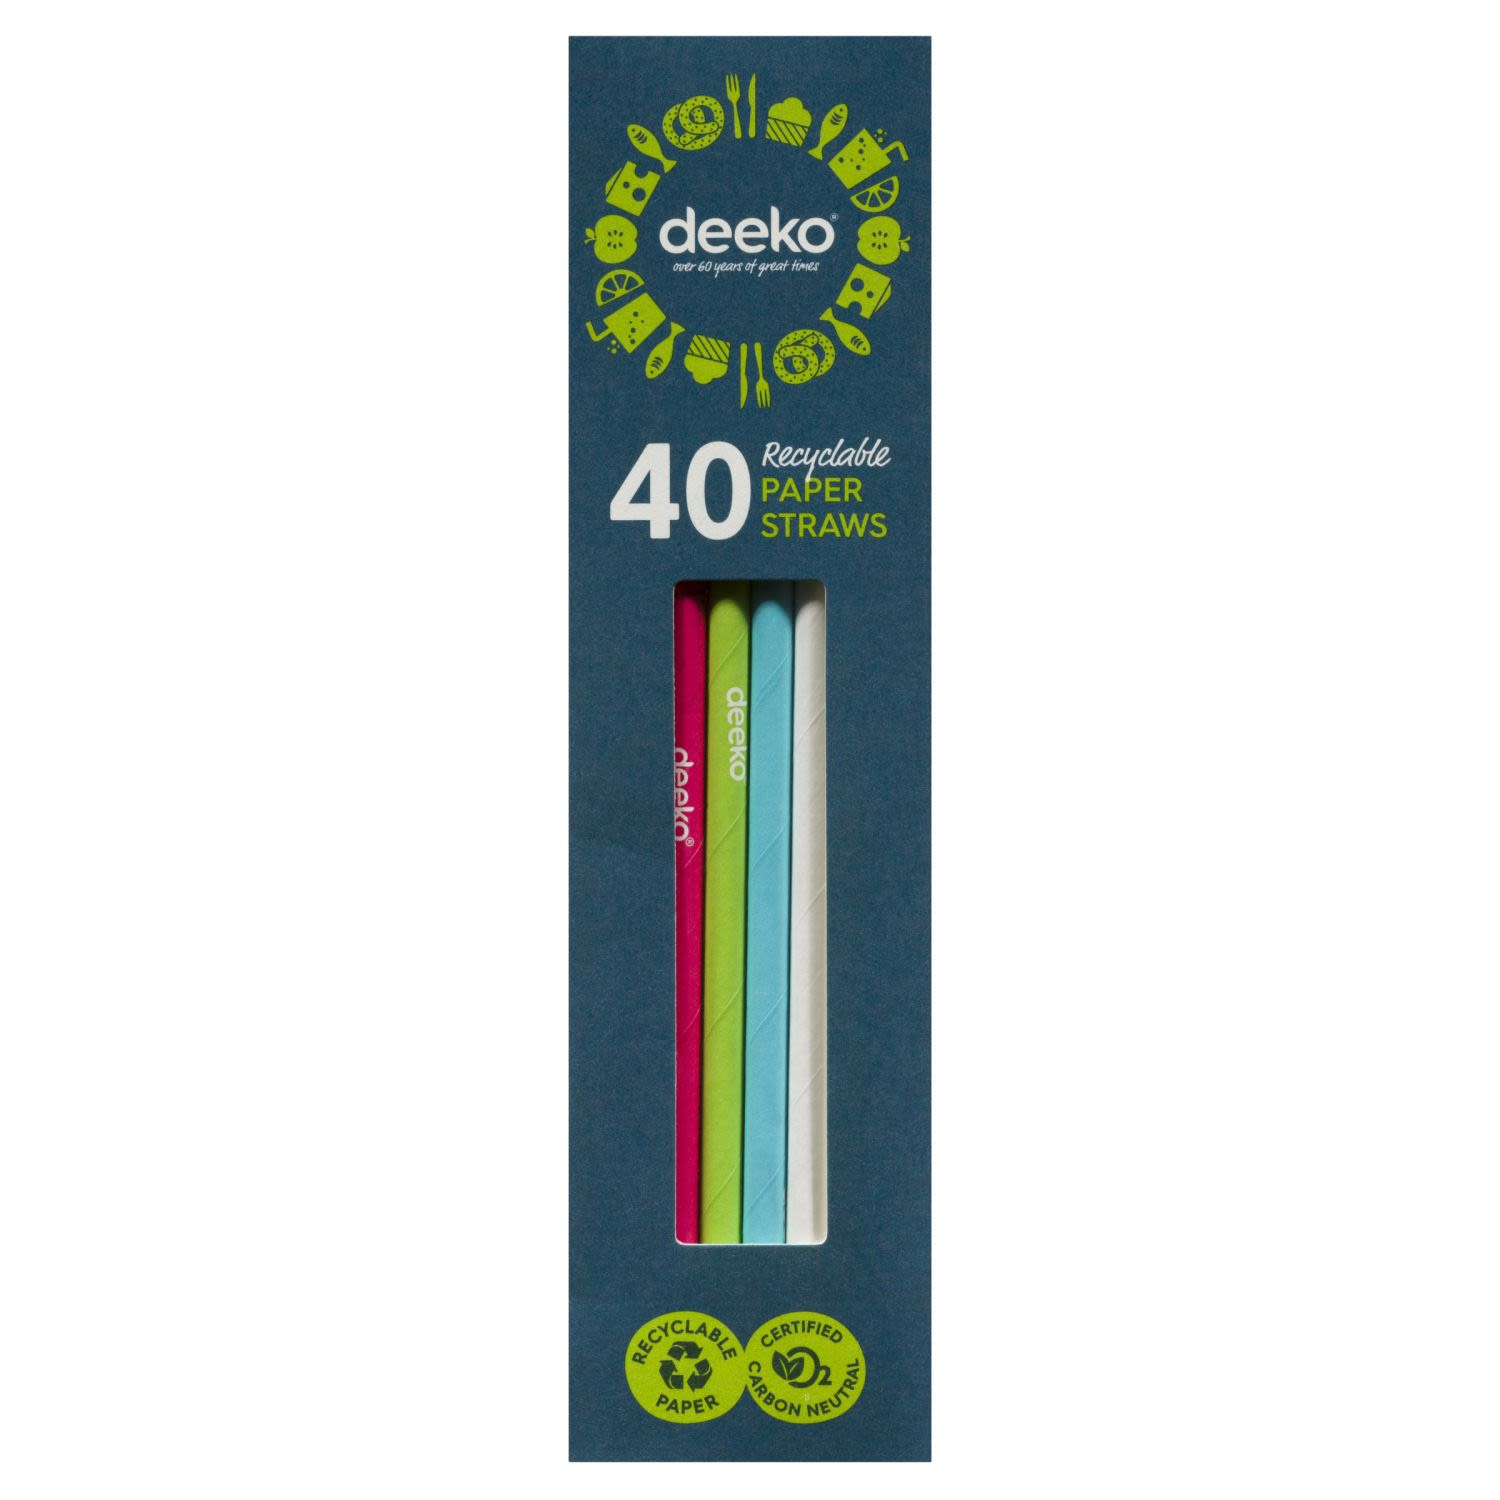 Deeko Paper Straws, 40 Each